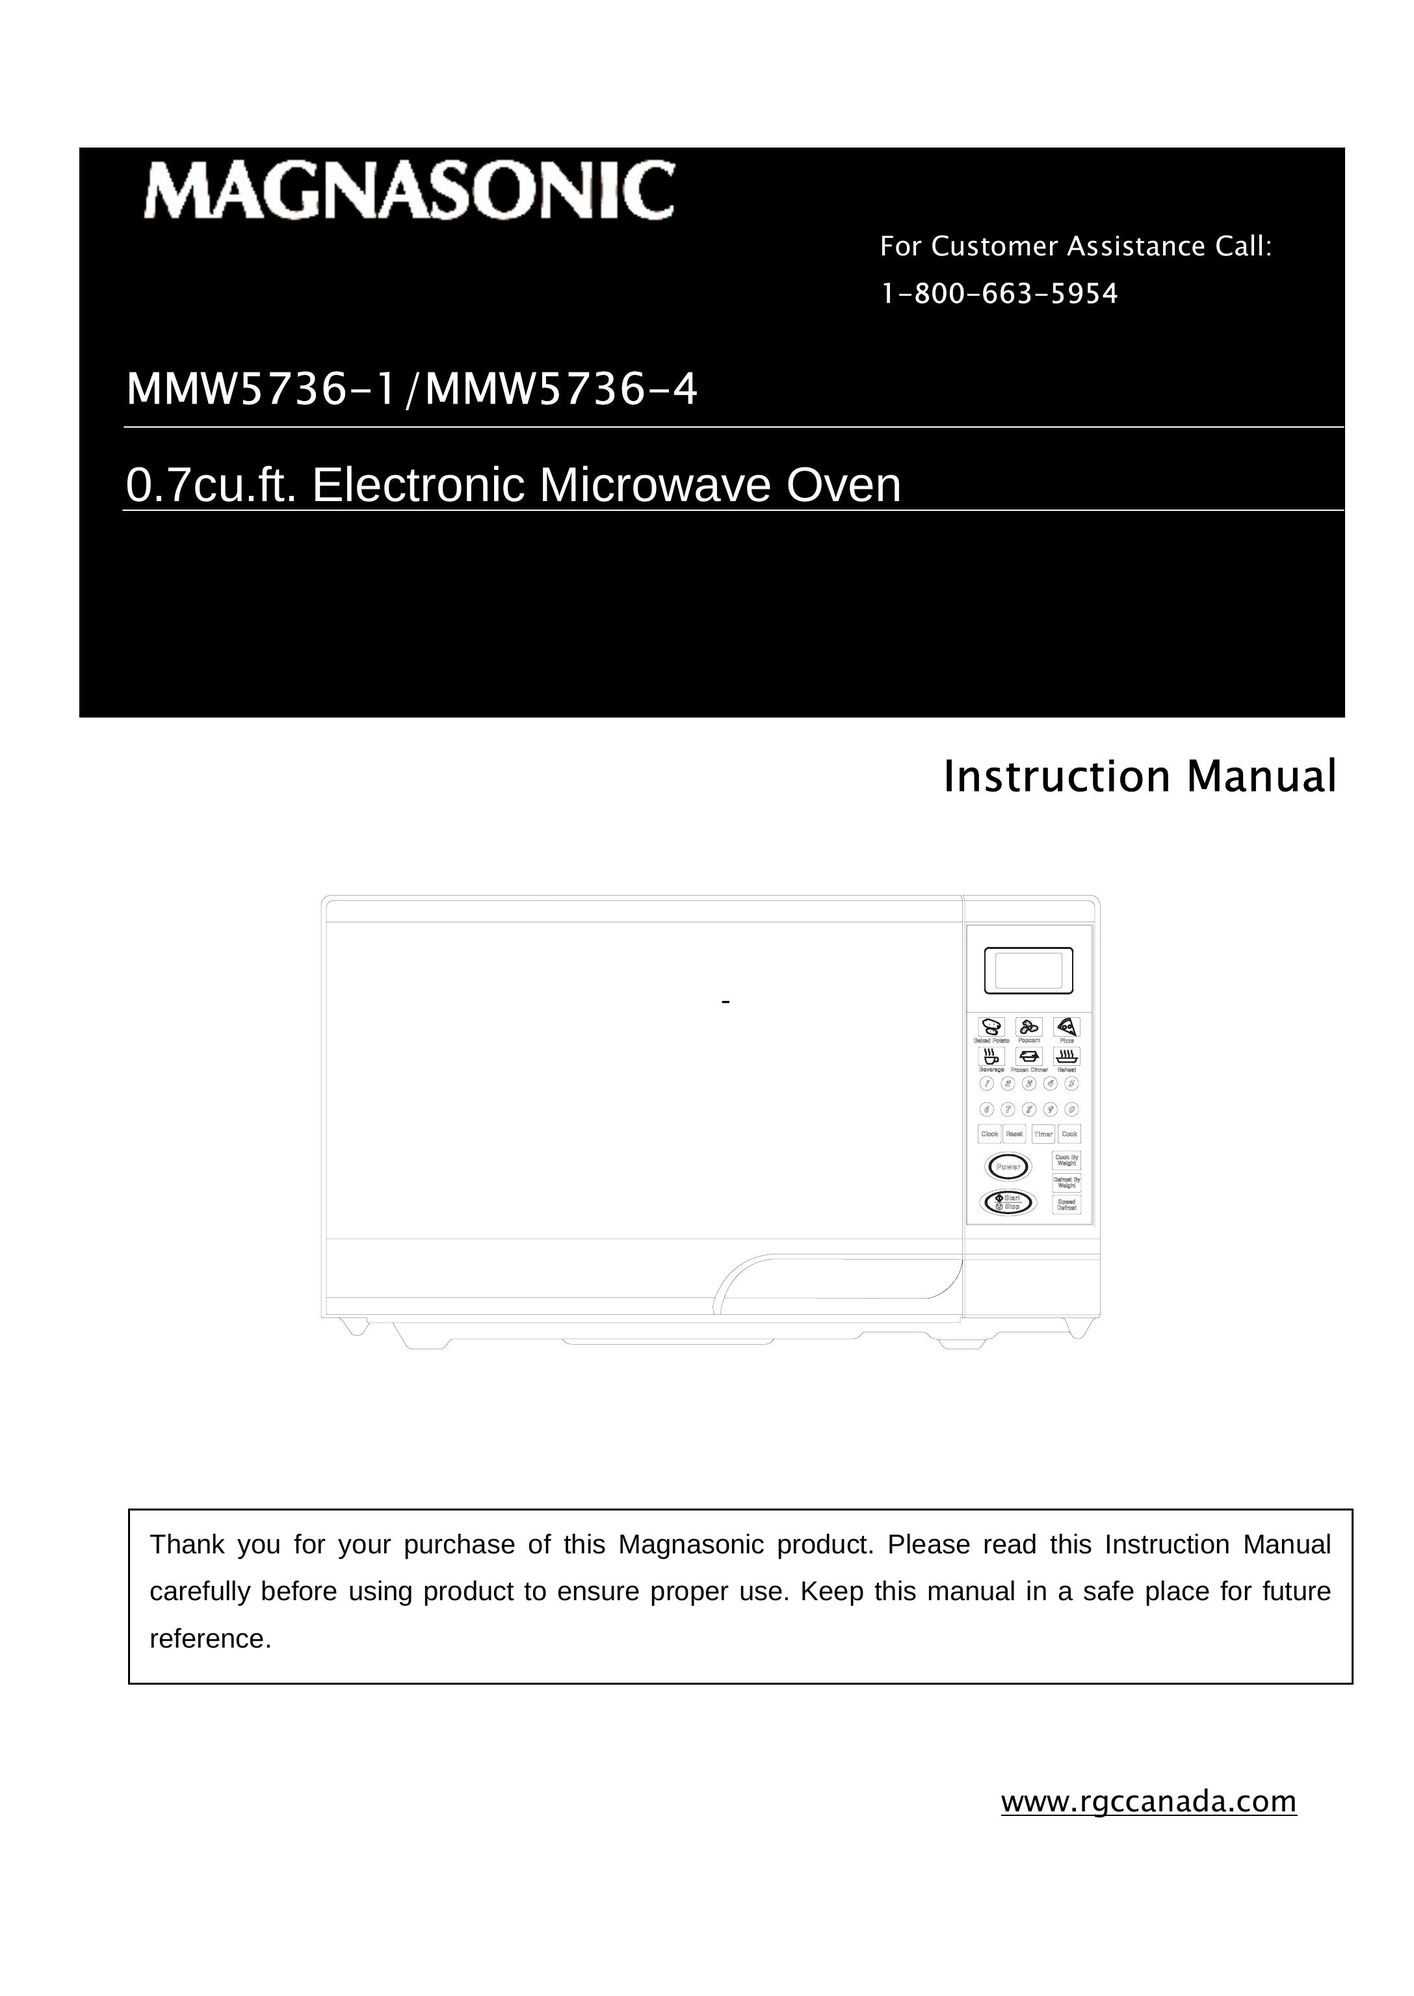 Magnasonic MMW5736-4 Microwave Oven User Manual